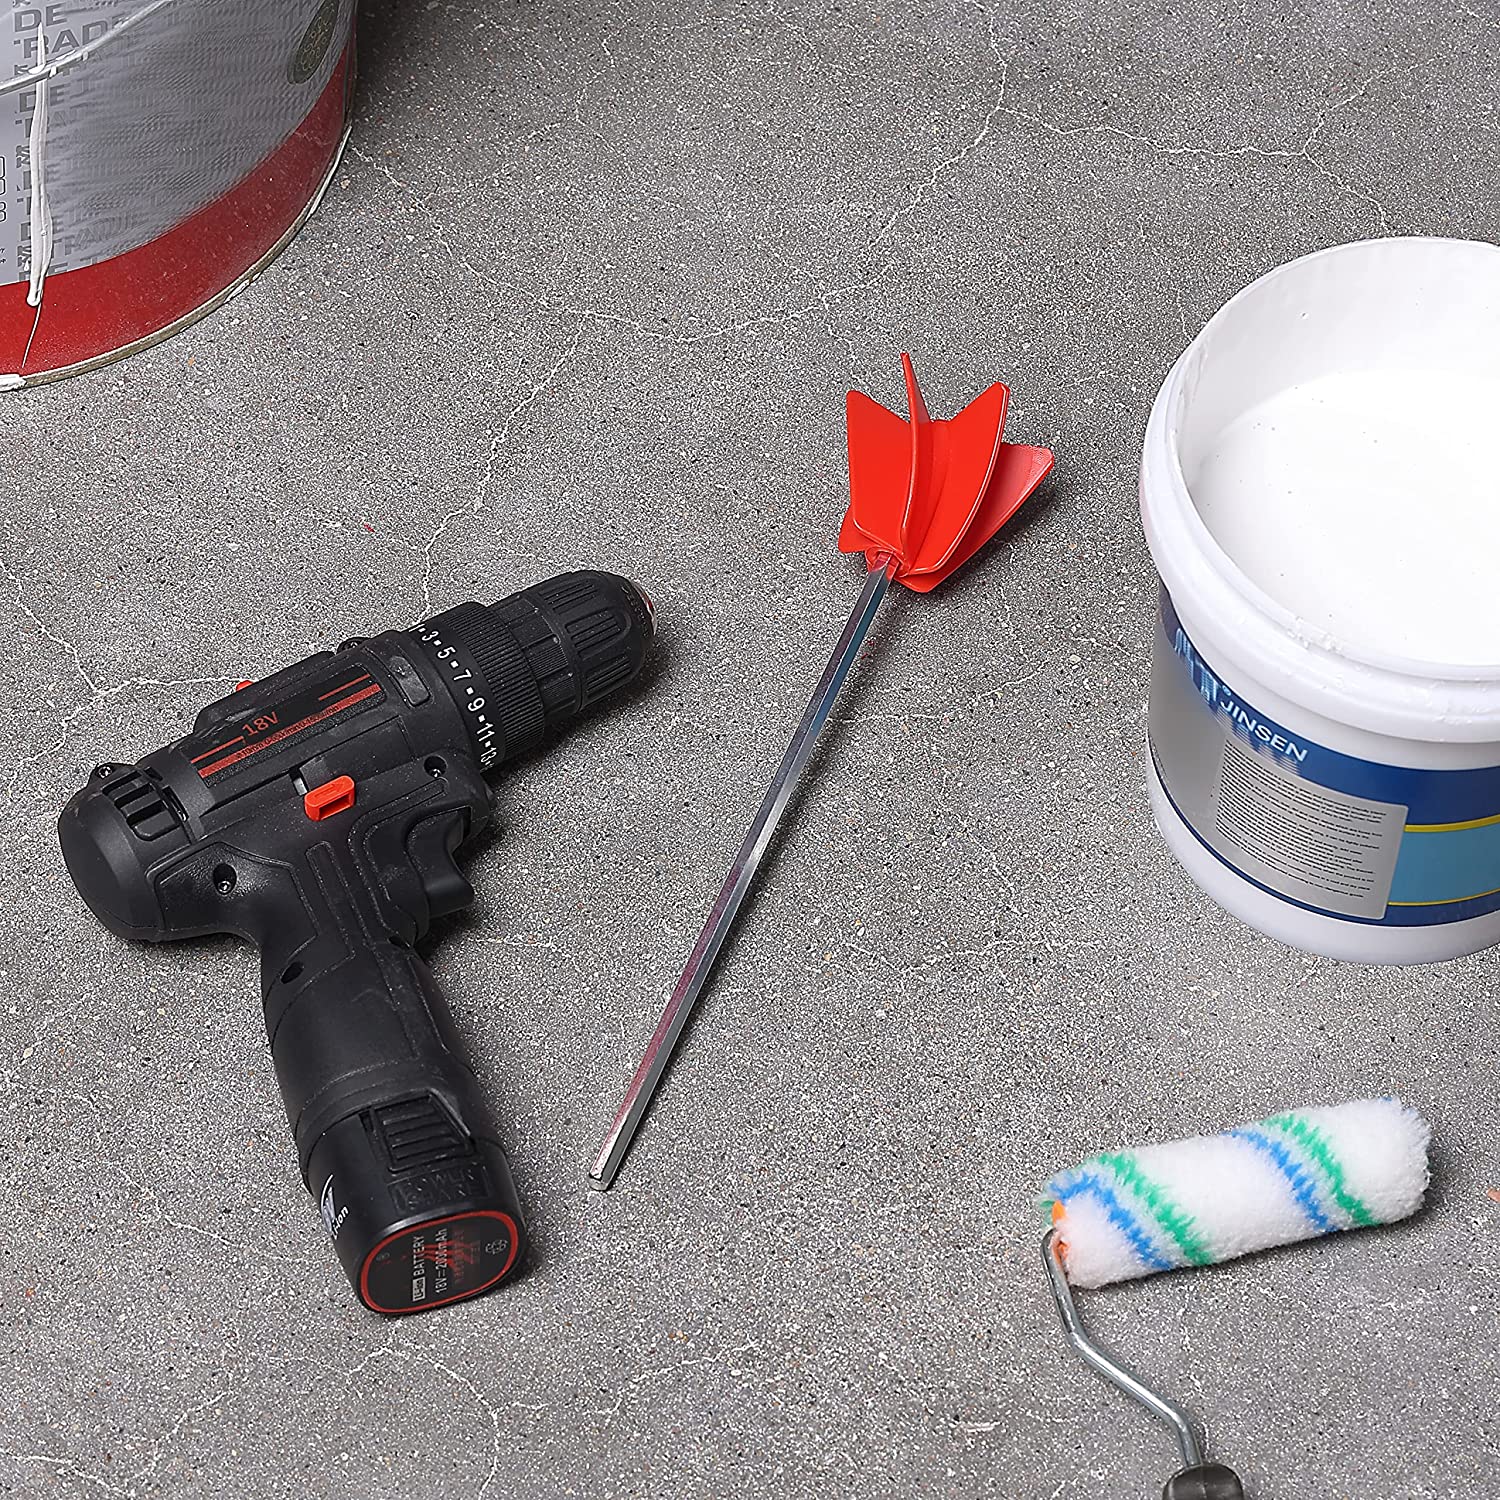 Paint Mixer, 1 to 3 Gallon Buckets, Mud Mixer, Paint Stirrer for Drill,  Paint Mixer for Drill, Drill Mixer Attachment - Bates Choice